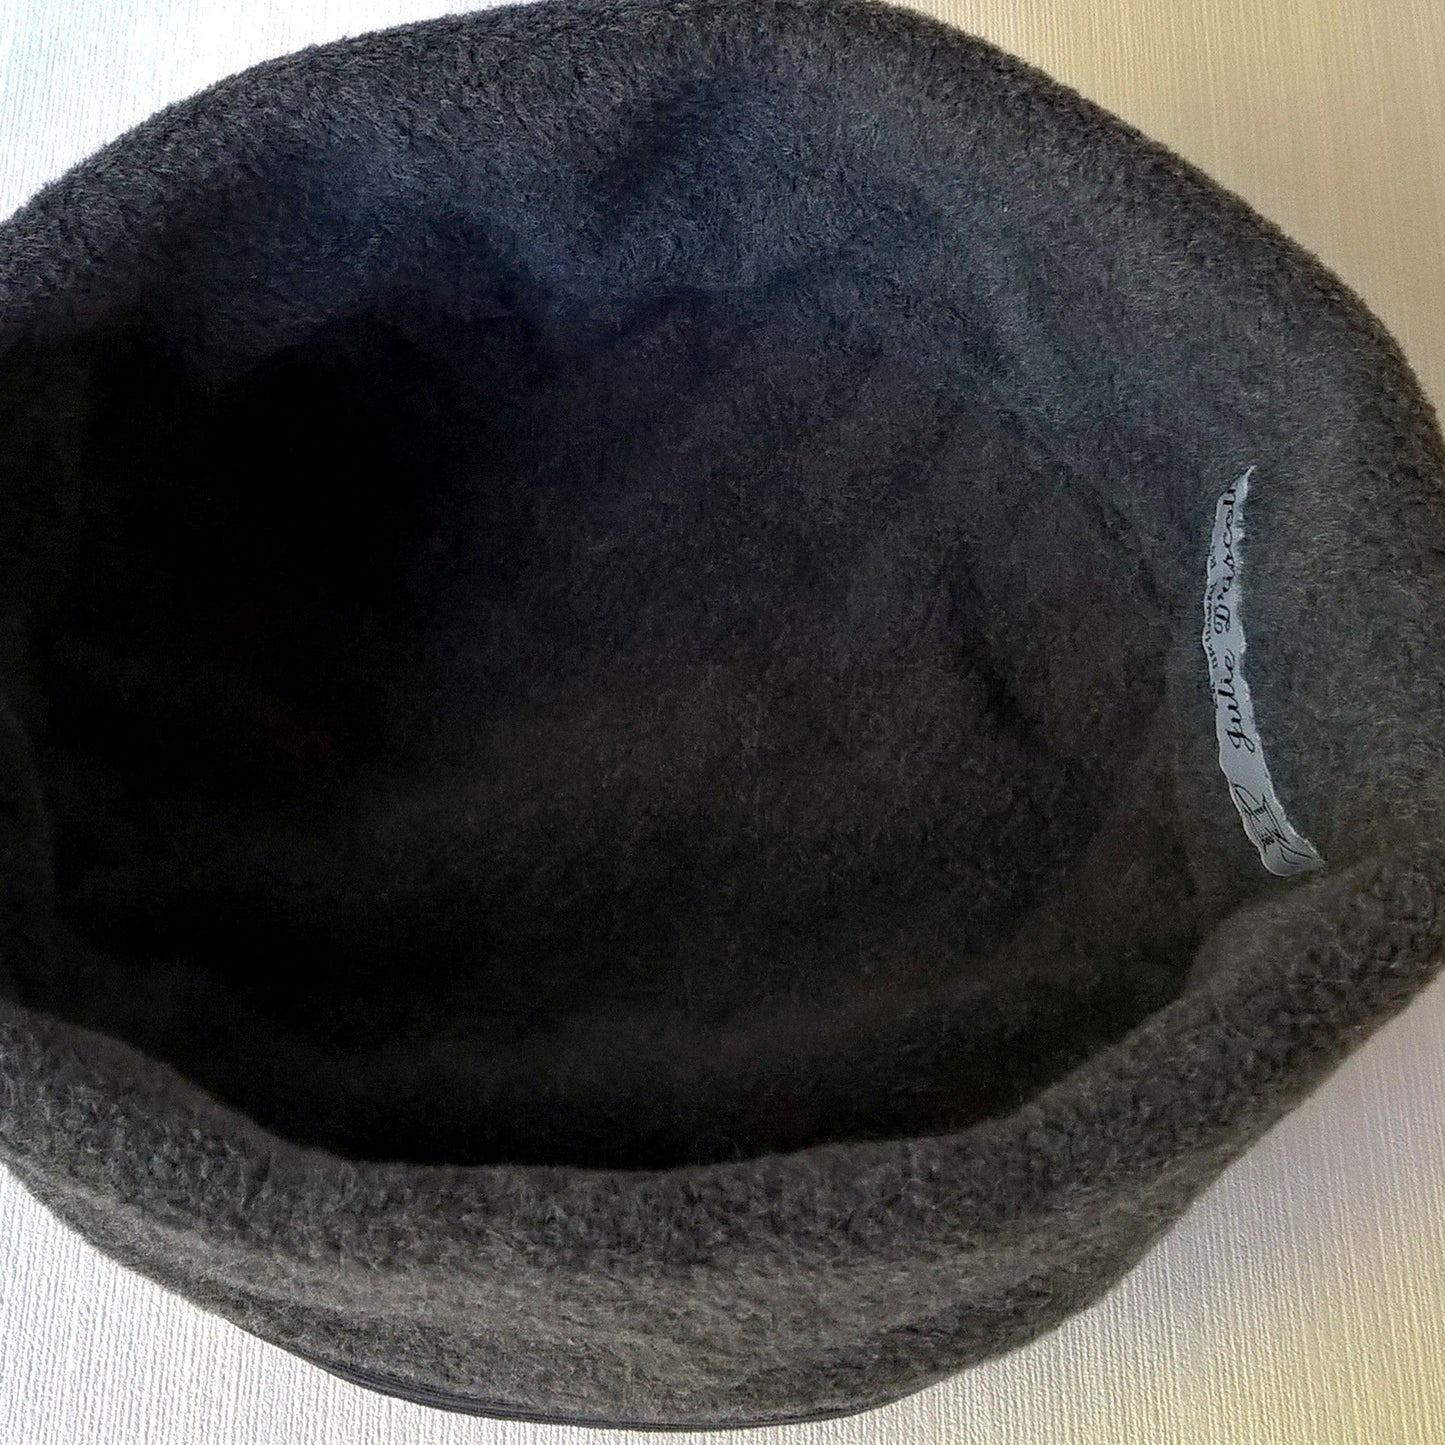 Grey fleece hat with fleece lining